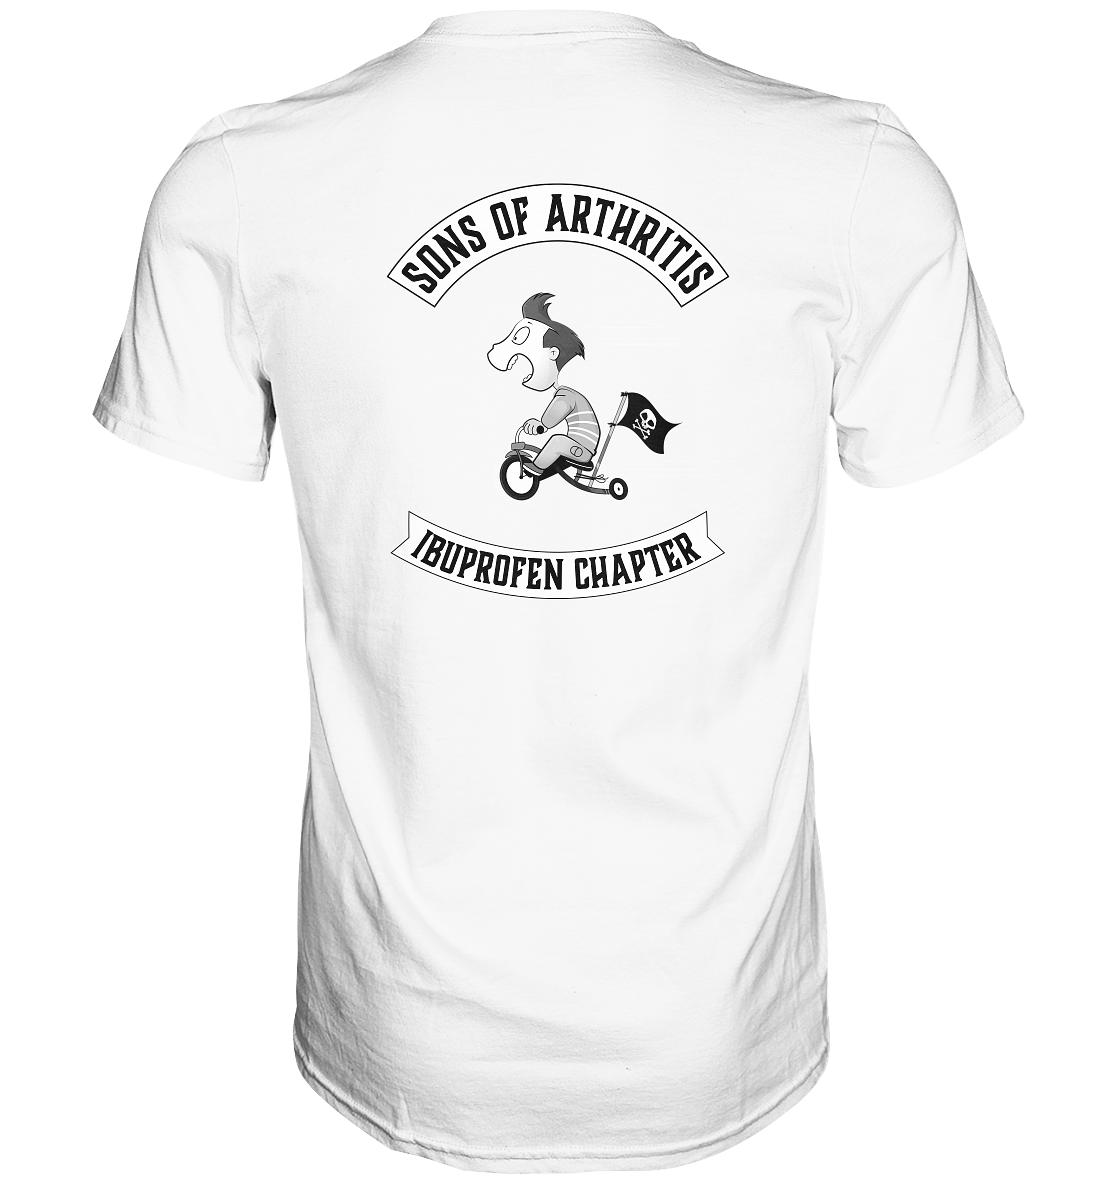 Sons of Arthritis - Ibuprofen Chapter Premium unisex shirt. Motiv Rückseite.